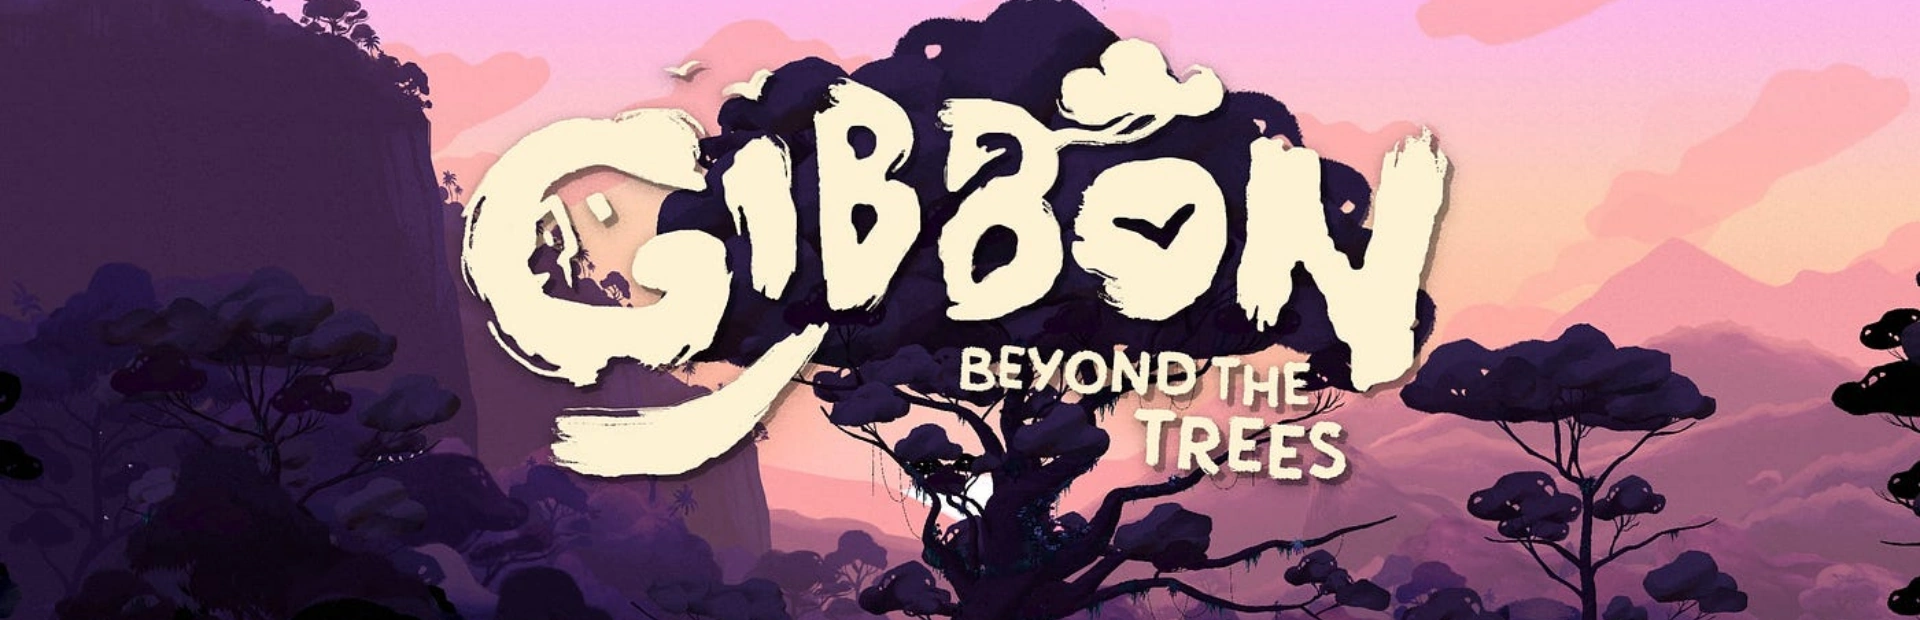 Gibbon Beyond.the .Trees .banner3